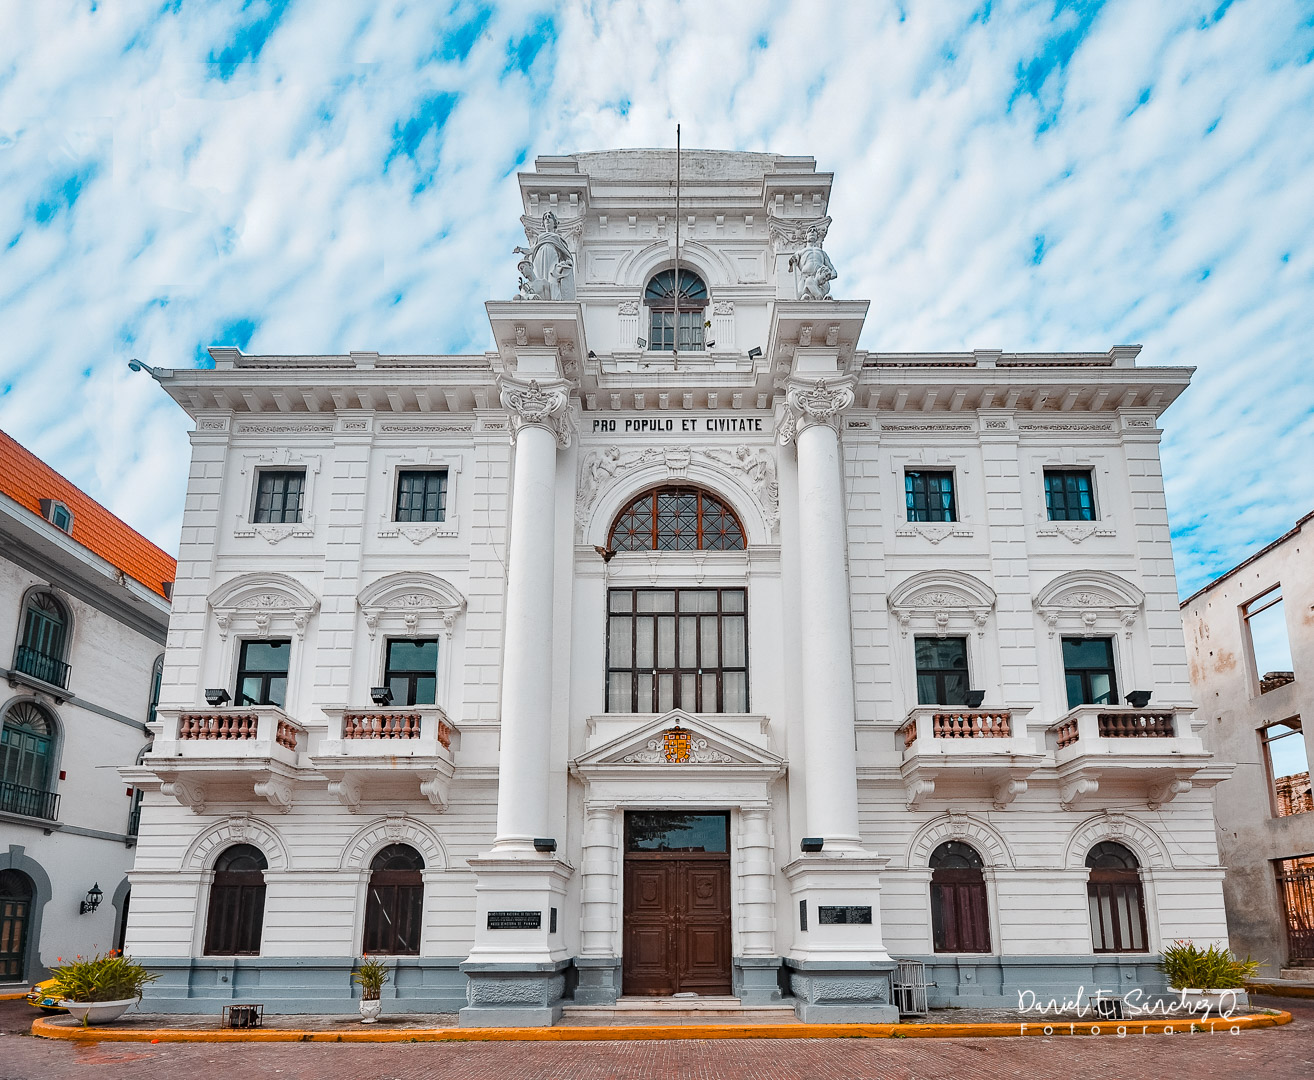 Cabildo - Palacio Municipal